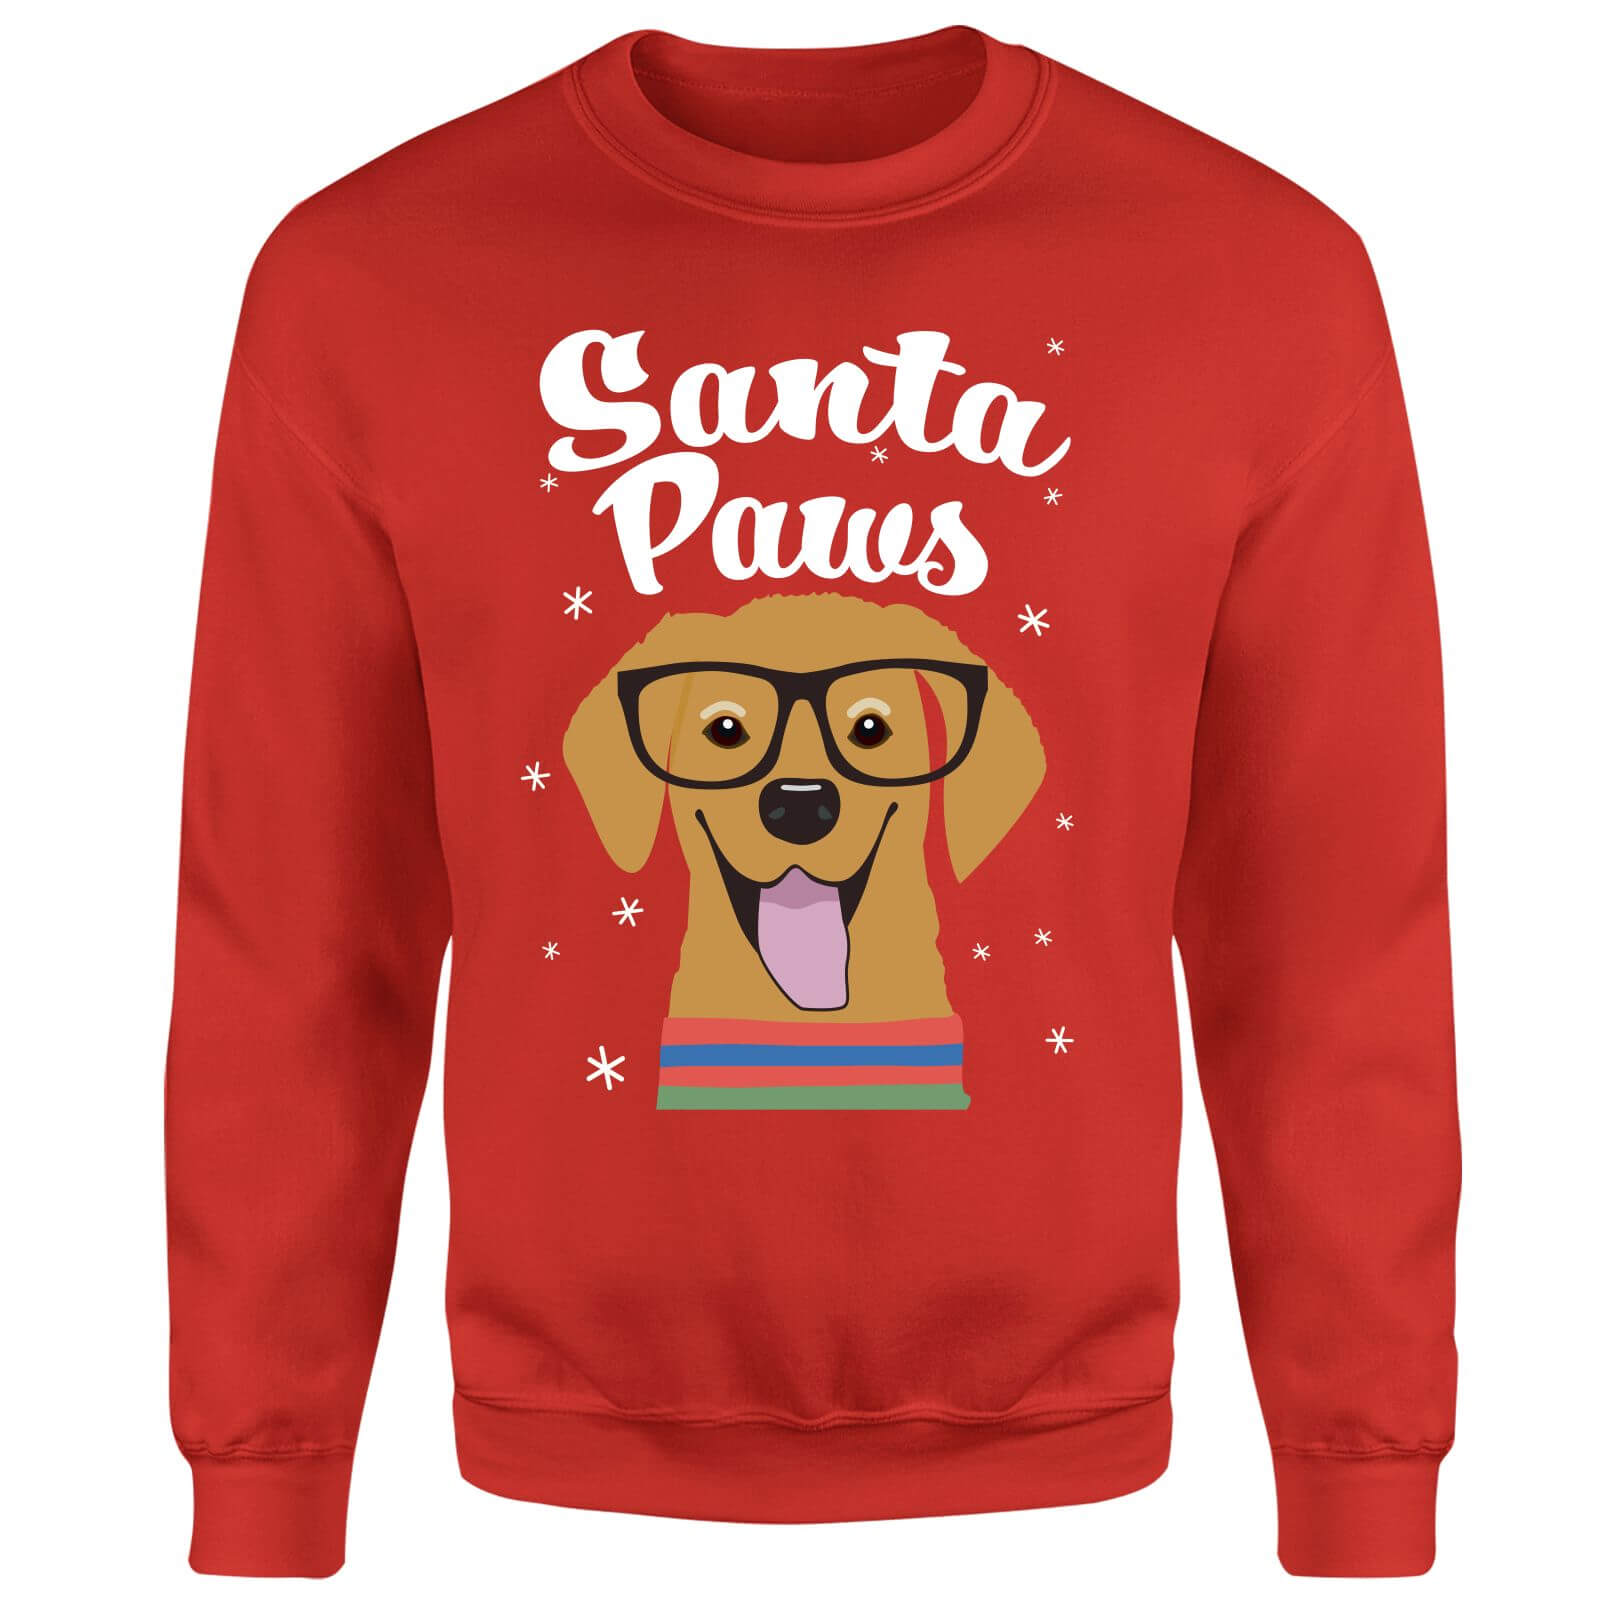 Santa Paws Red Sweatshirt - M - Red